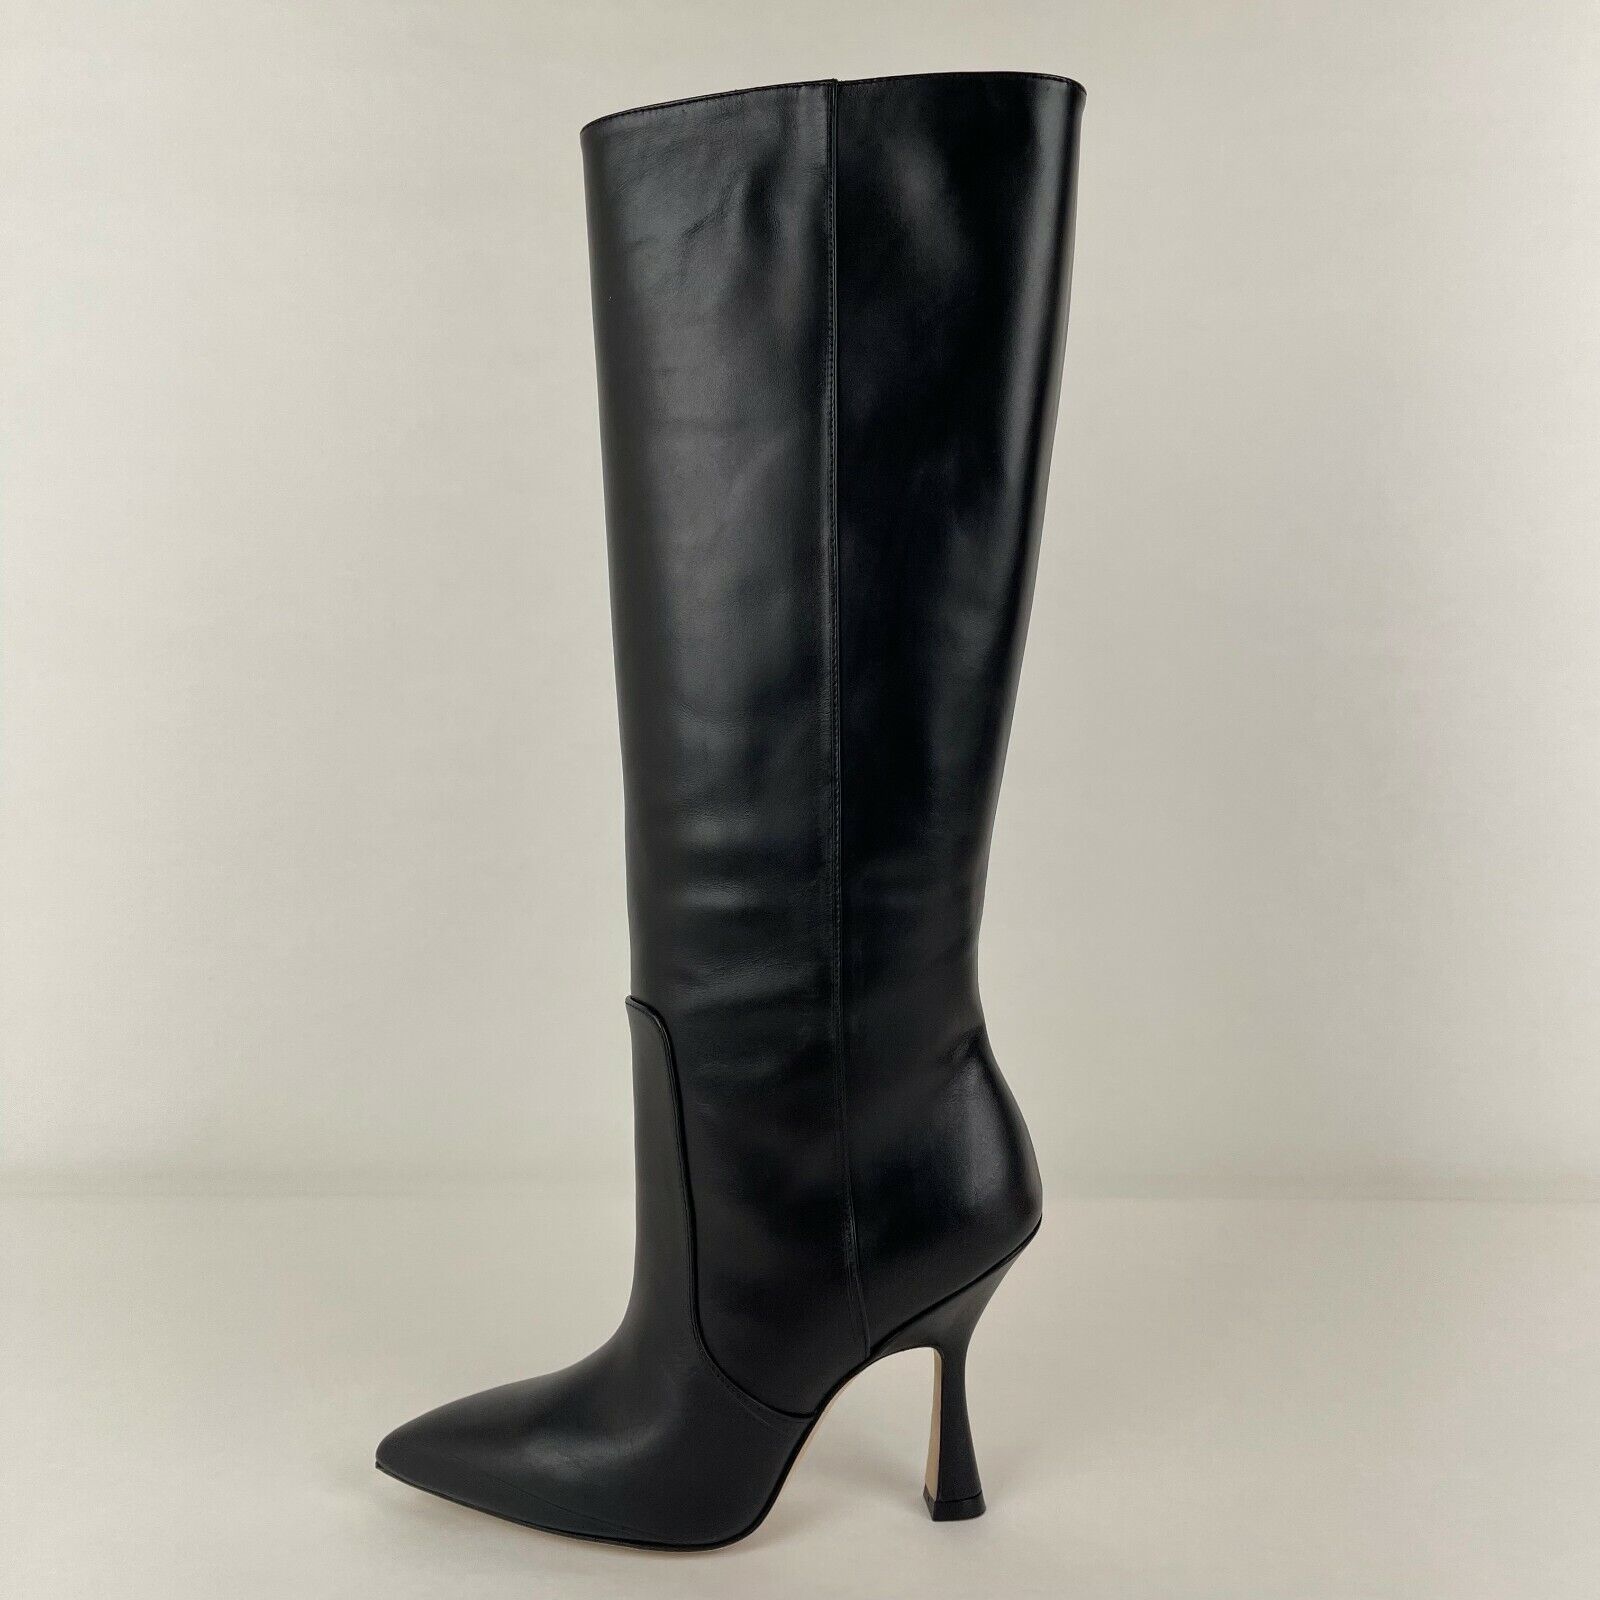 Pre-owned Stuart Weitzman $795  Parton Black Leather Knee High Heel Boots Eu 36.5 / Us 6 B